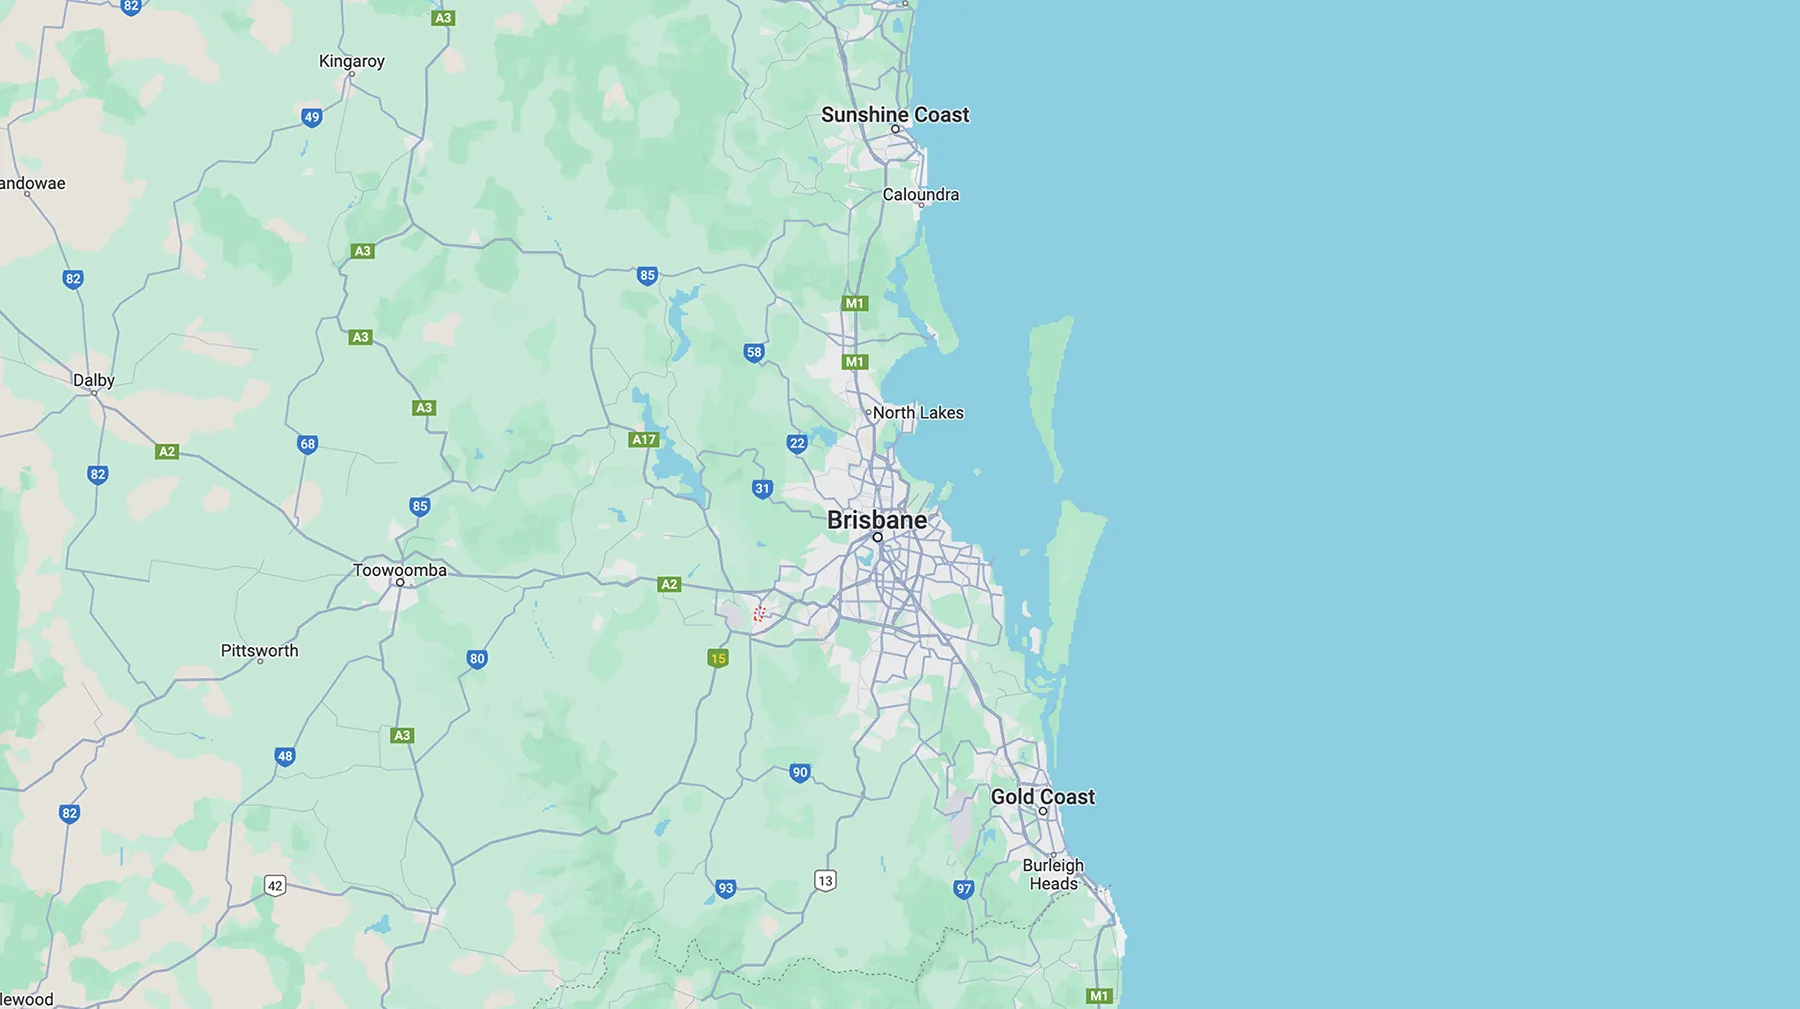 Map of Brisbane, Queensland